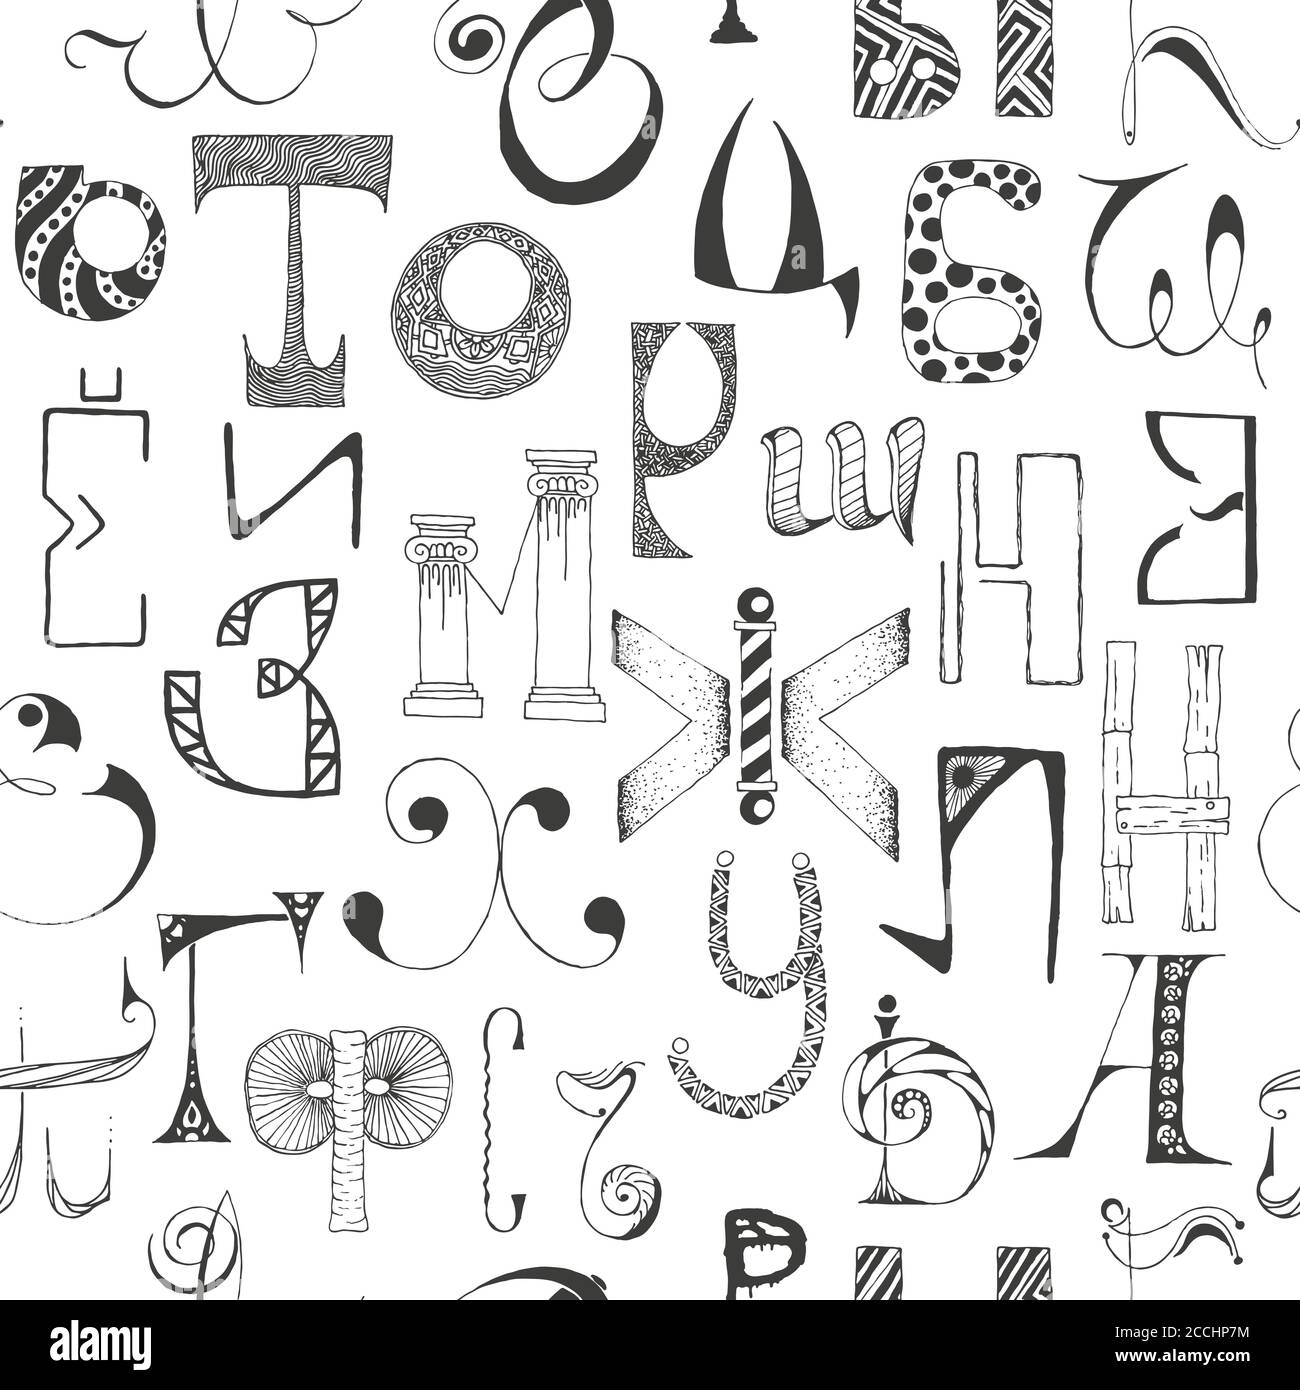 Magic School Alphabet Cirillic Set Letters Stock Vector by ©arttext  402288398